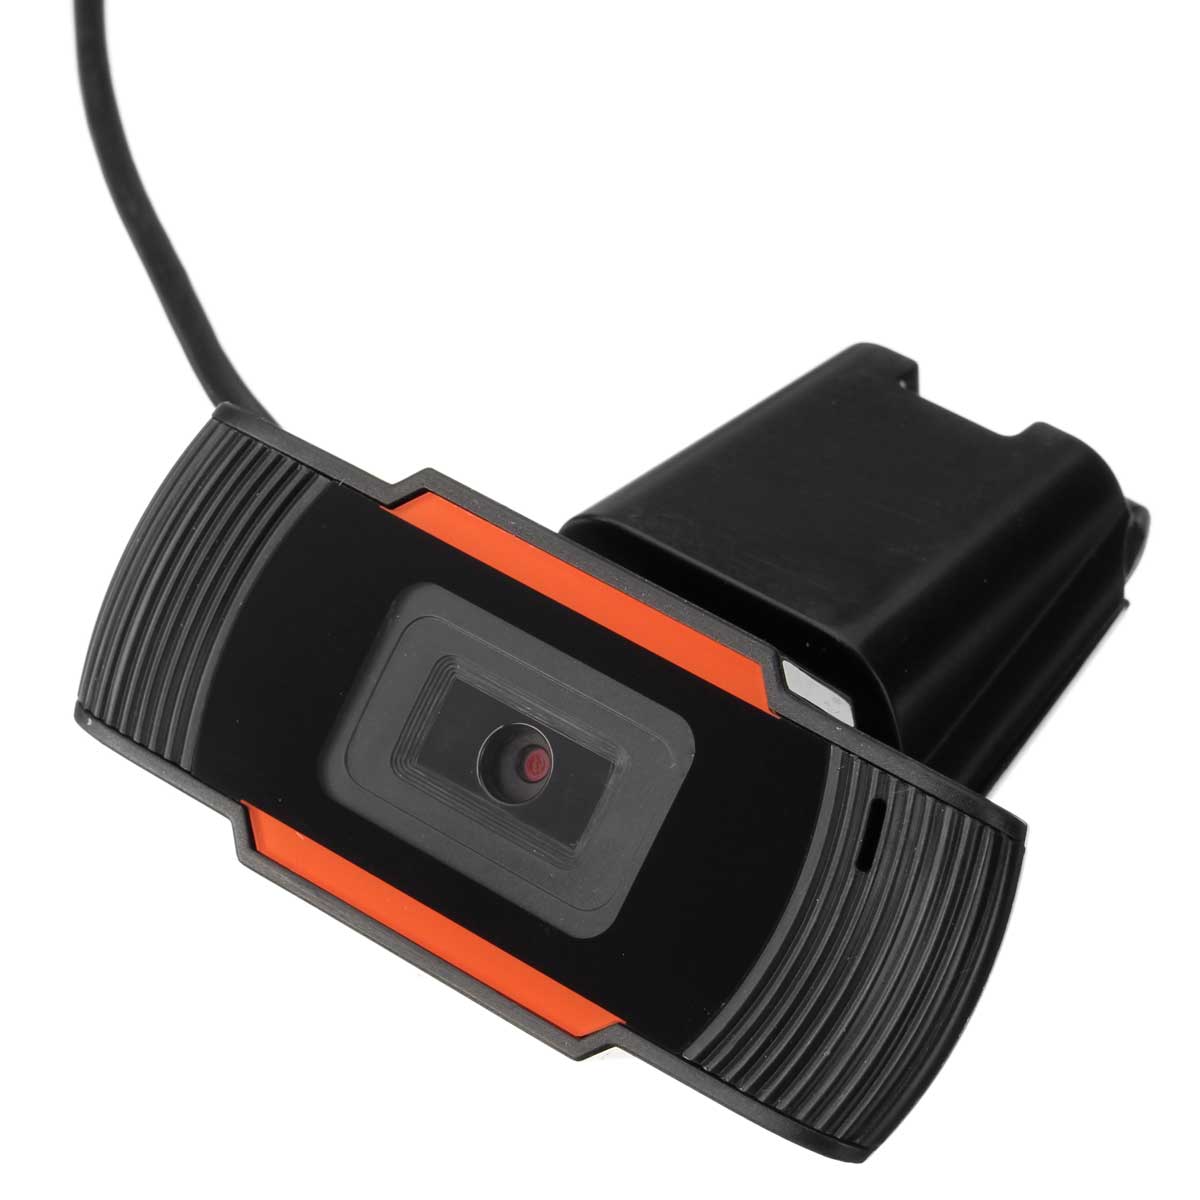 HXSJ A870C USB 2.0 PC Camera 640X480 Video Record Webcamsera with MIC for Computer PC Laptop Skype MSN